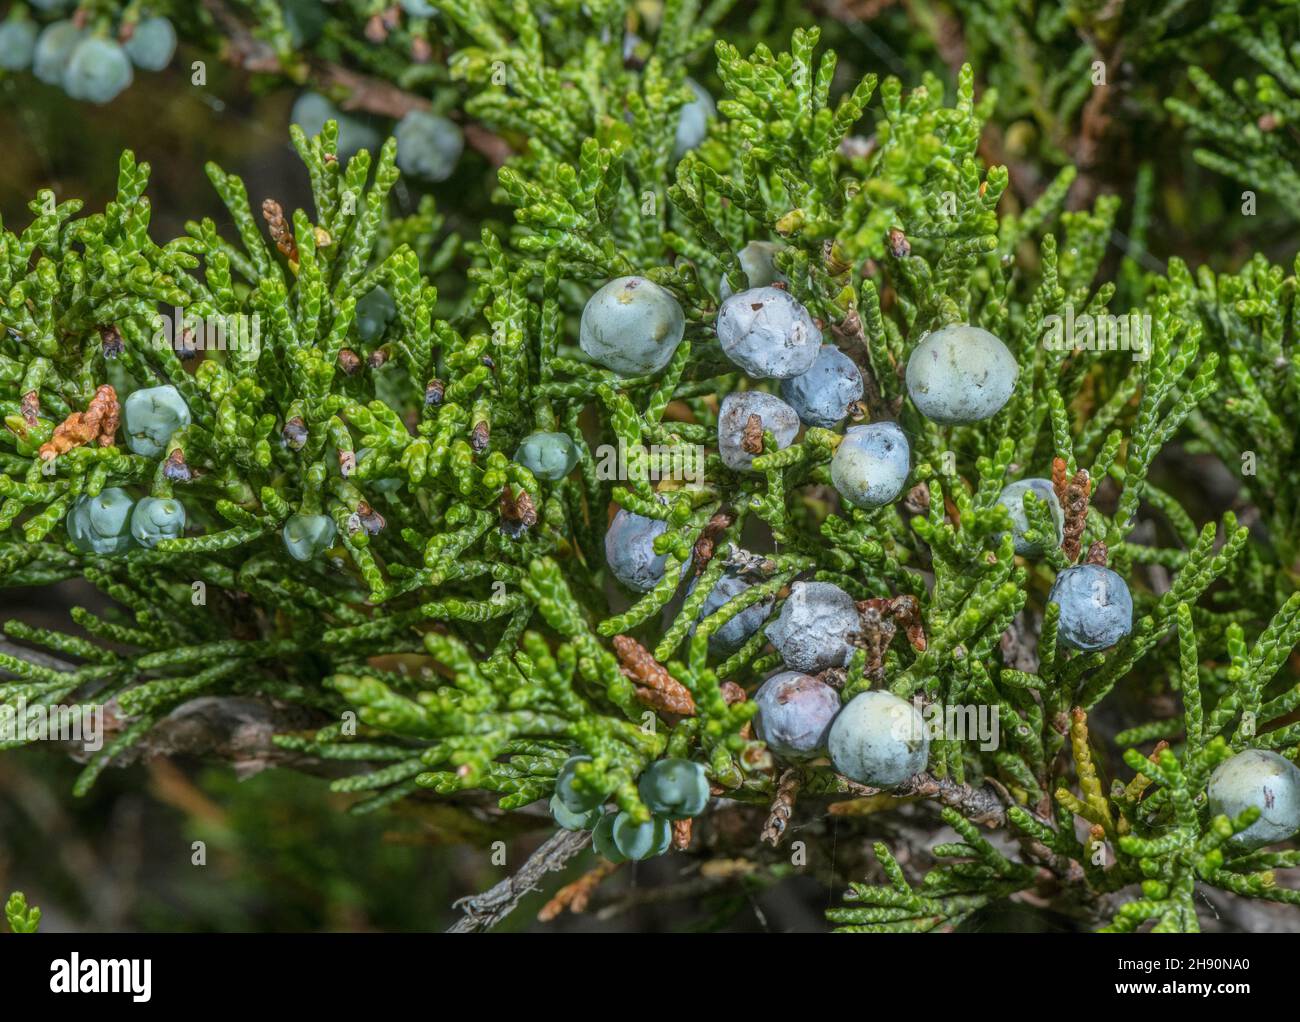 savin juniper, Juniperus sabina, with foliage and berries. French Alps. Stock Photo